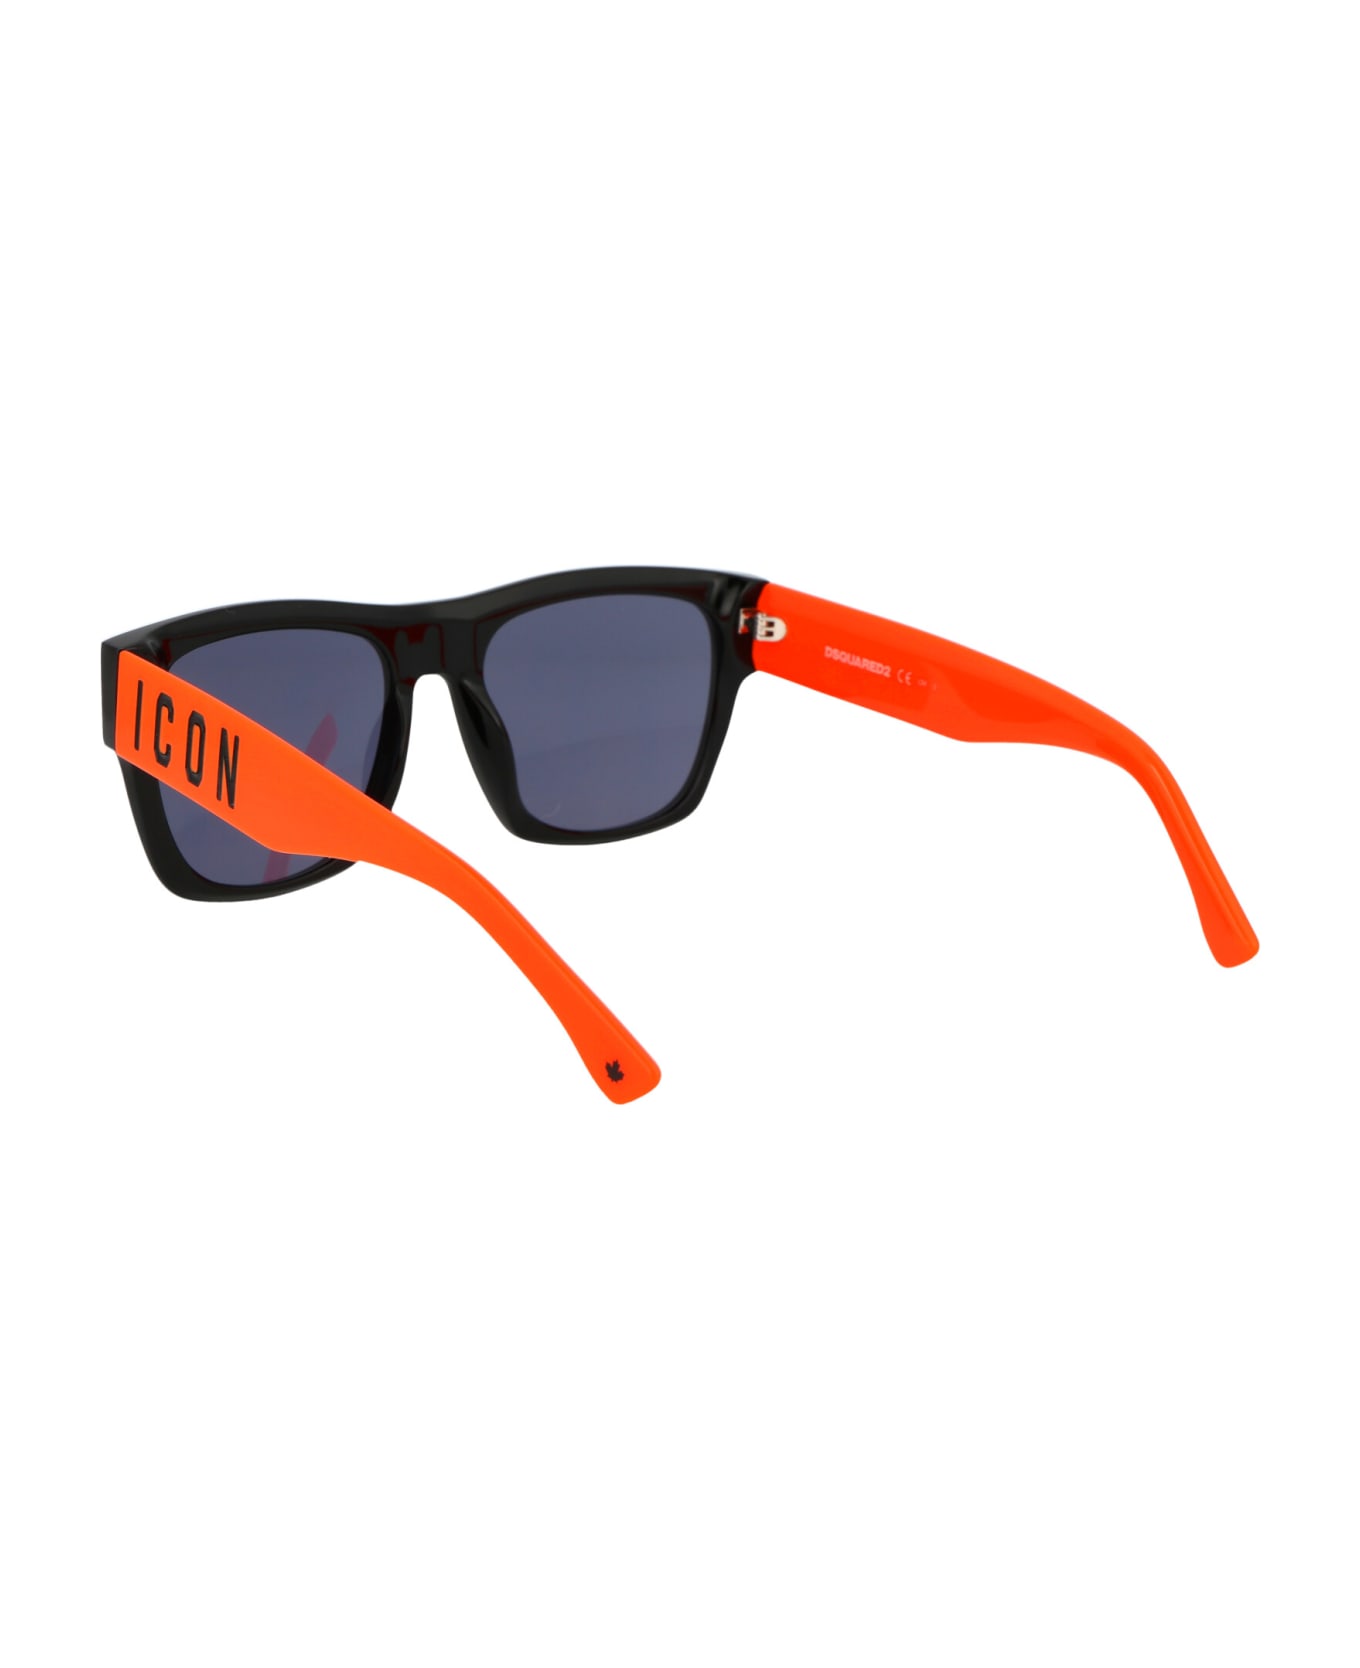 Dsquared2 Eyewear Icon 0004/s Sunglasses - 8LZ7Y BLACK ORANGE